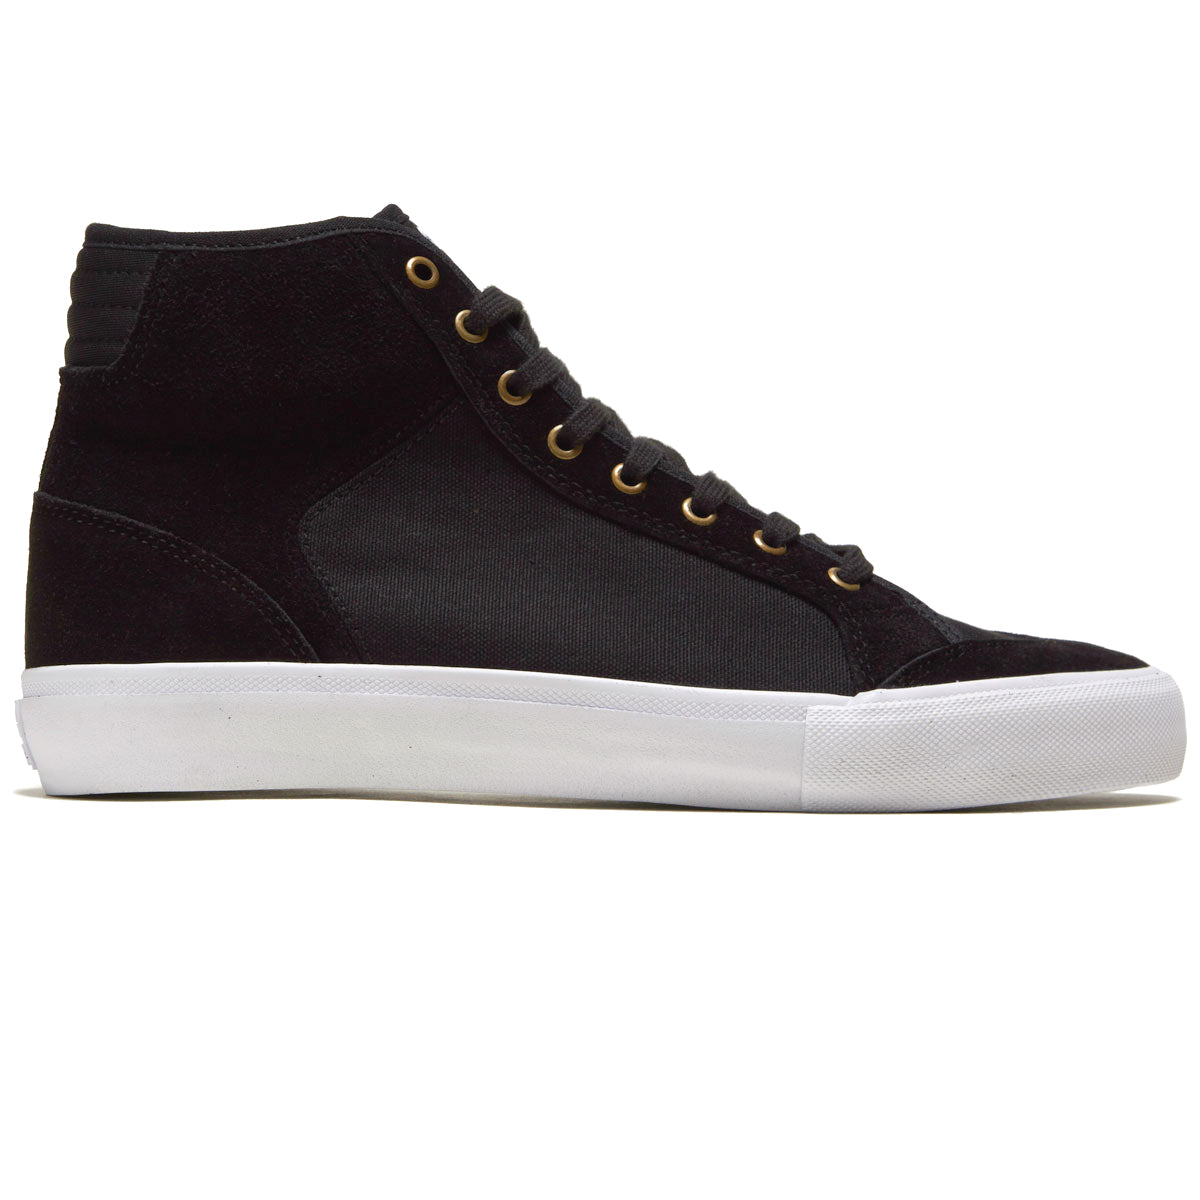 Opus Court side Hi Shoes - Black/White image 1